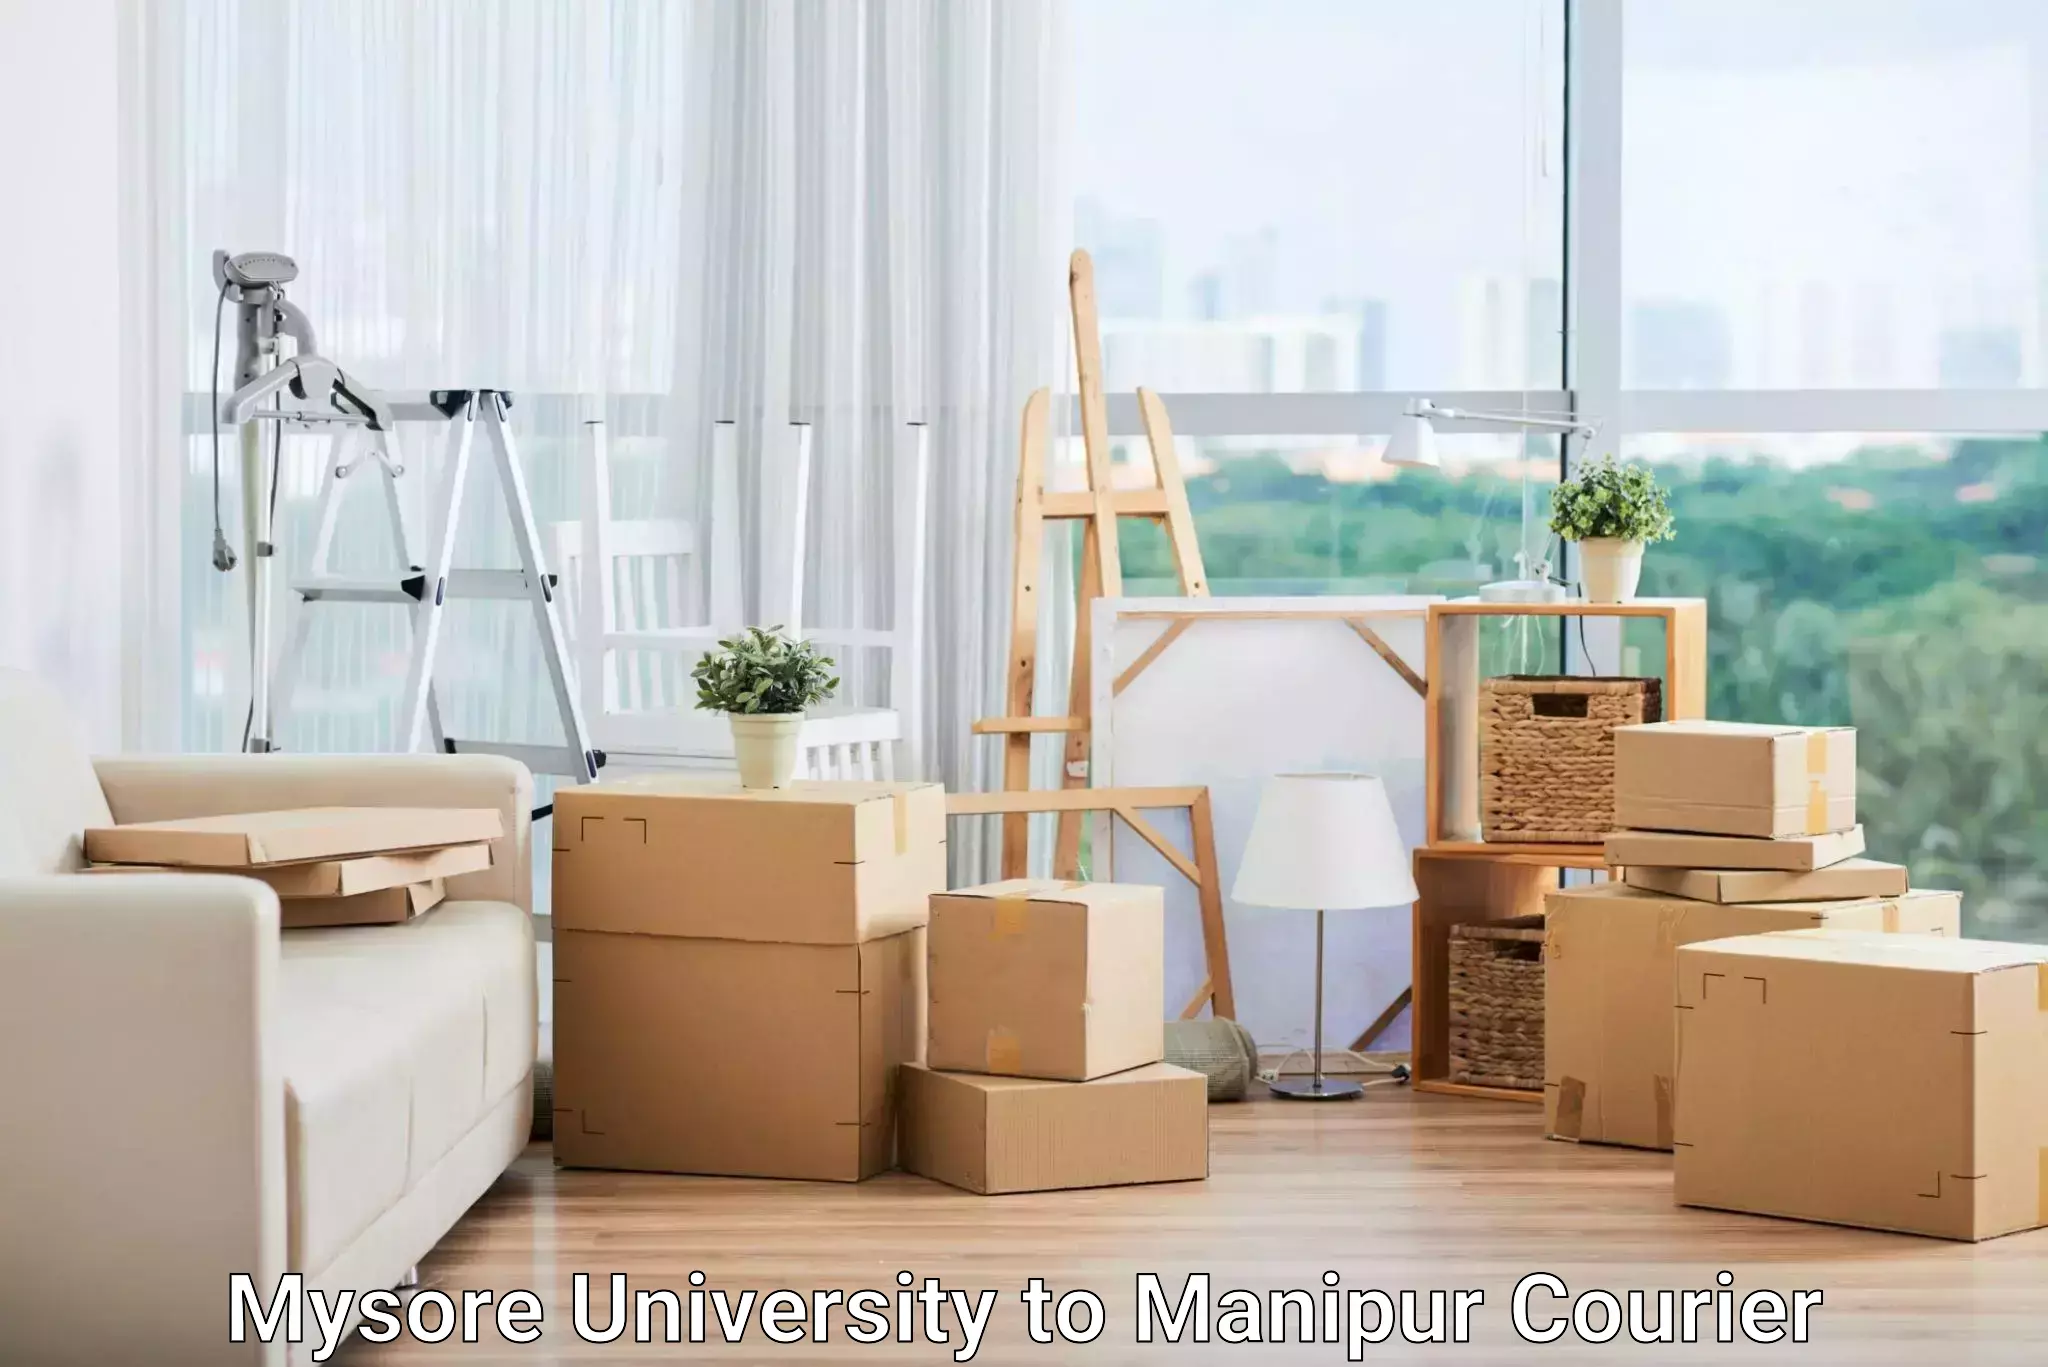 Cargo delivery service Mysore University to Chandel